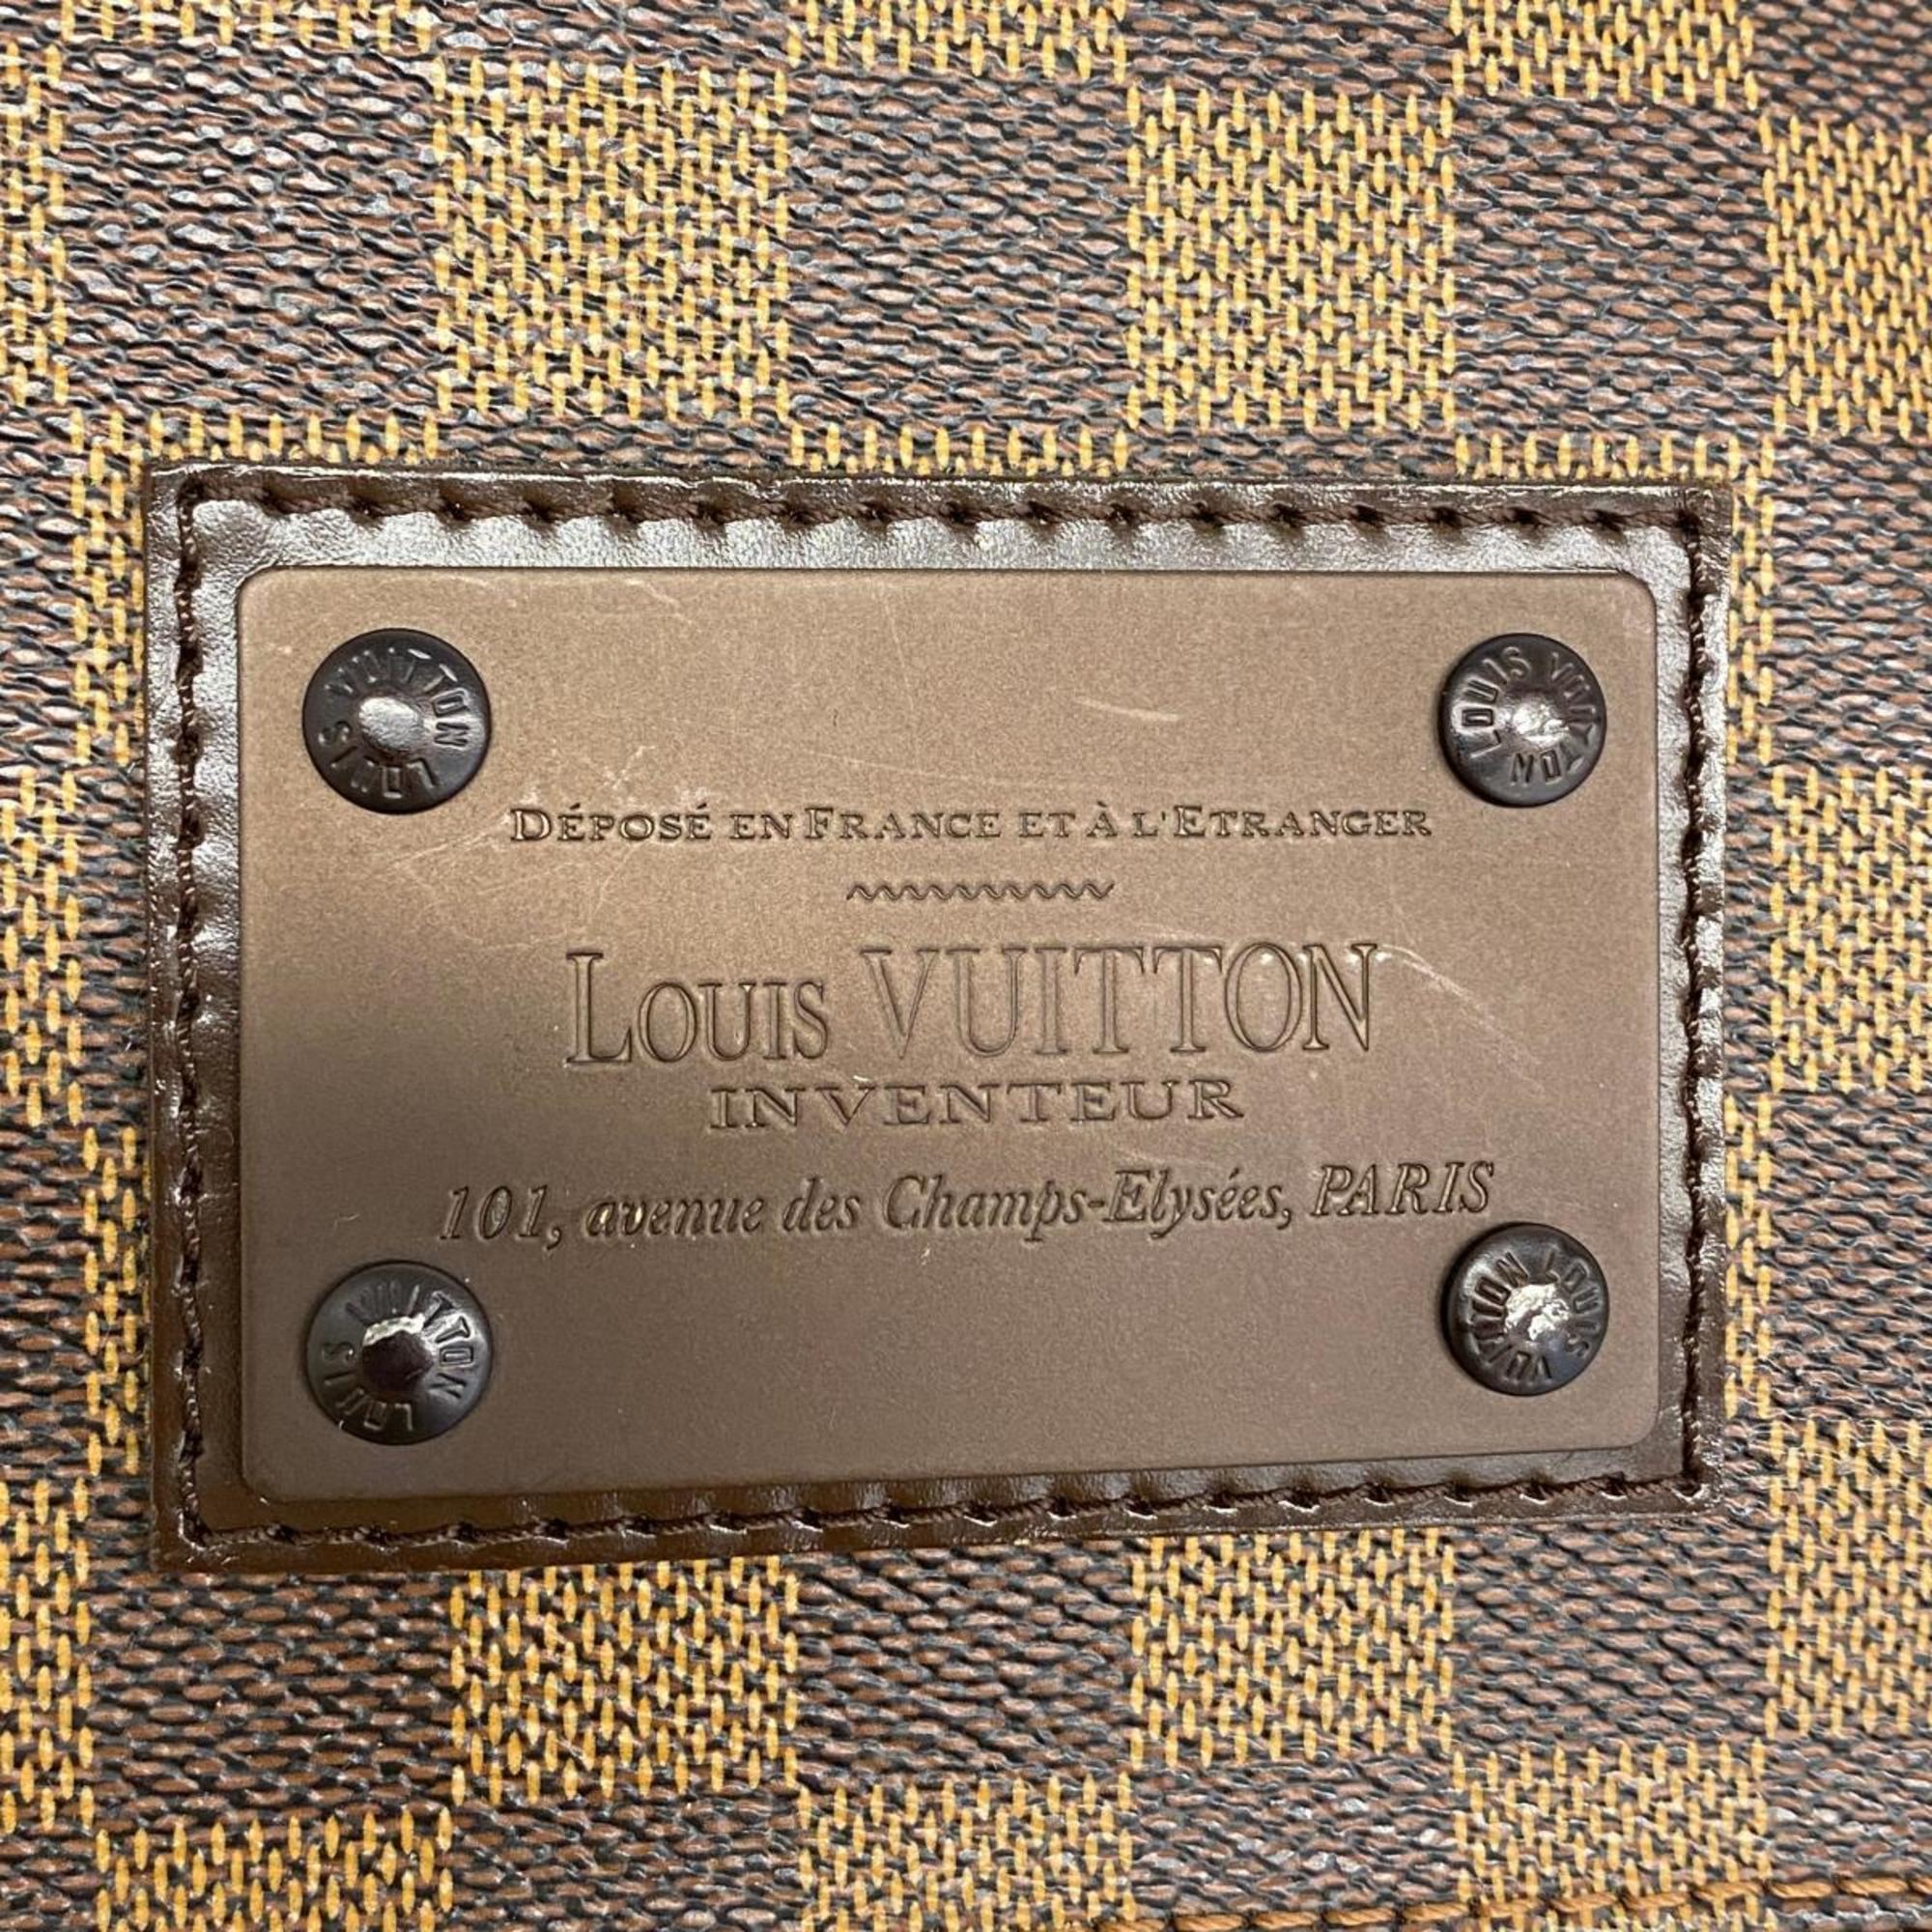 Louis Vuitton Shoulder Bag Damier Brooklyn PM N51210 Ebene Men's Women's